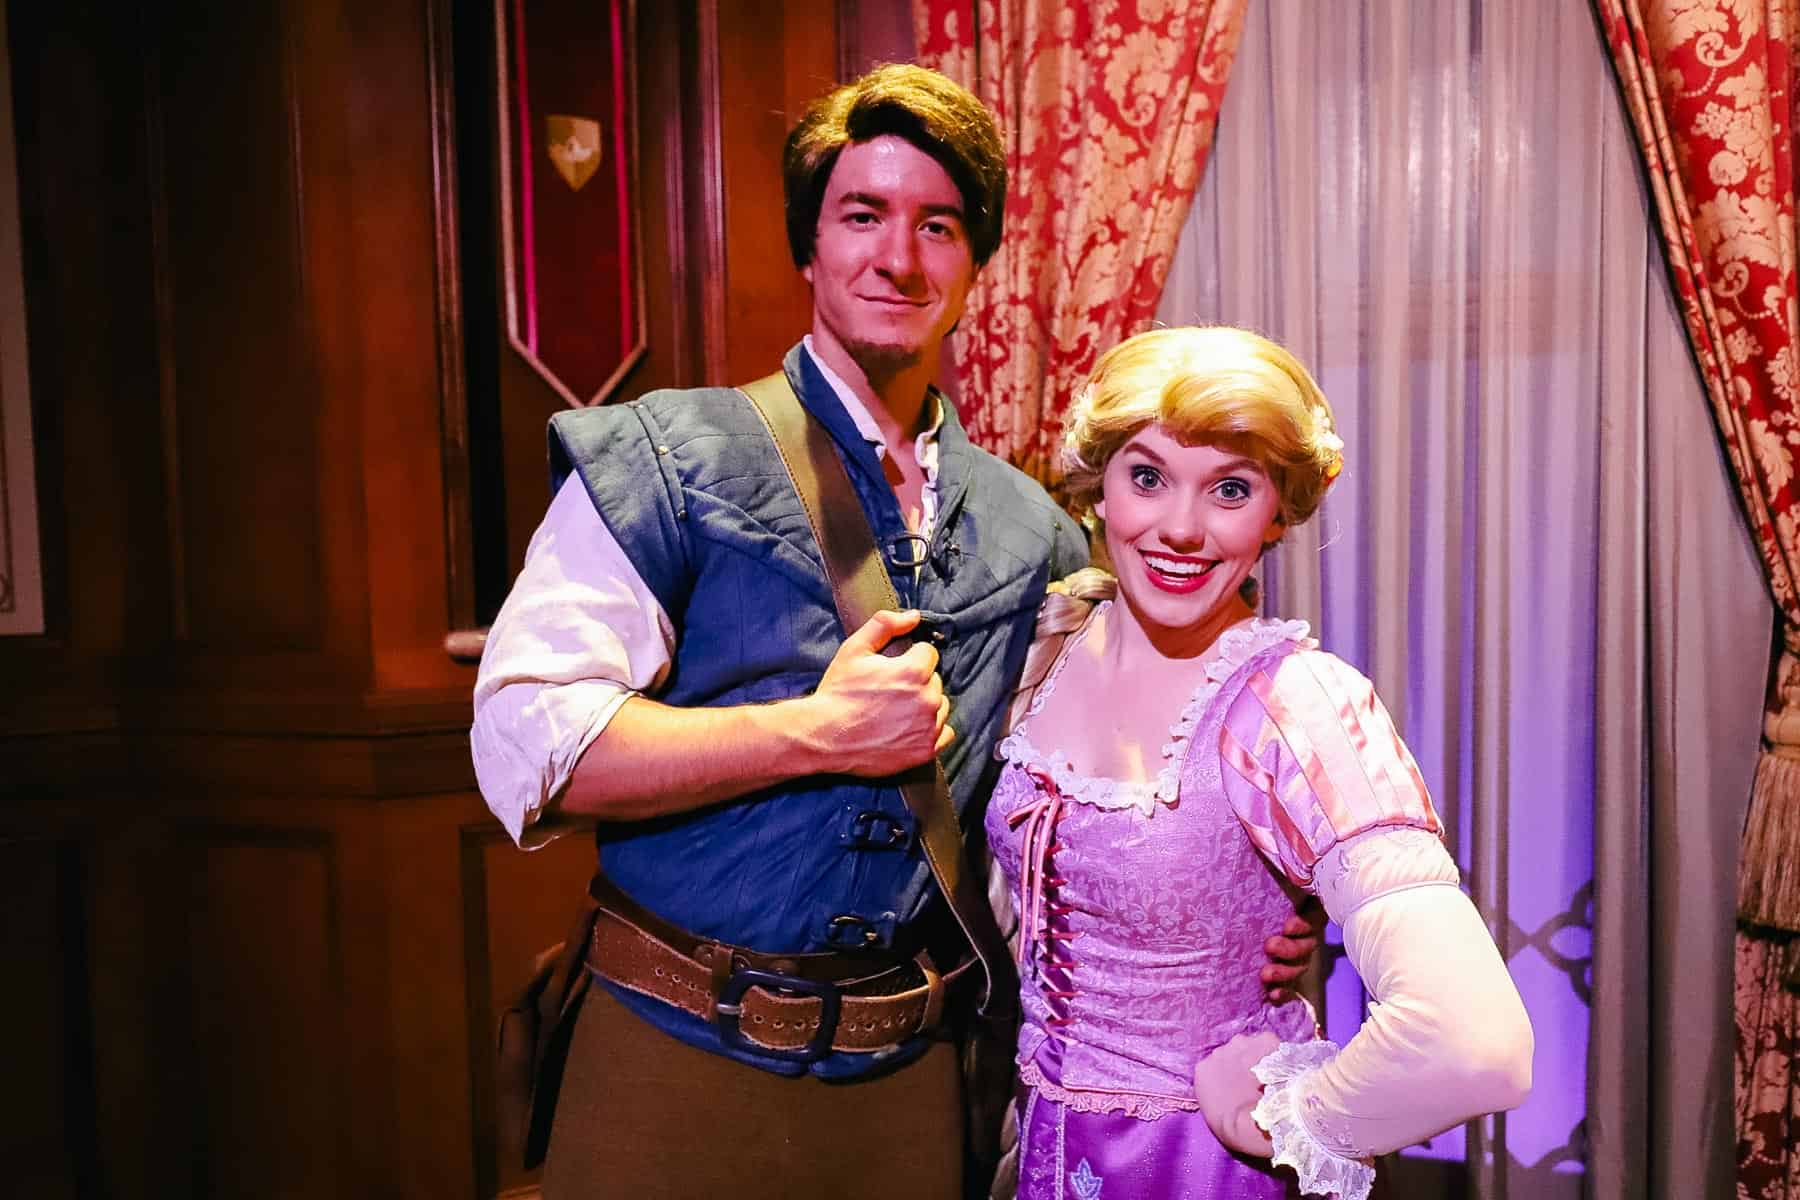 Flynn Rider and Rapunzel pose together at Magic Kingdom. 